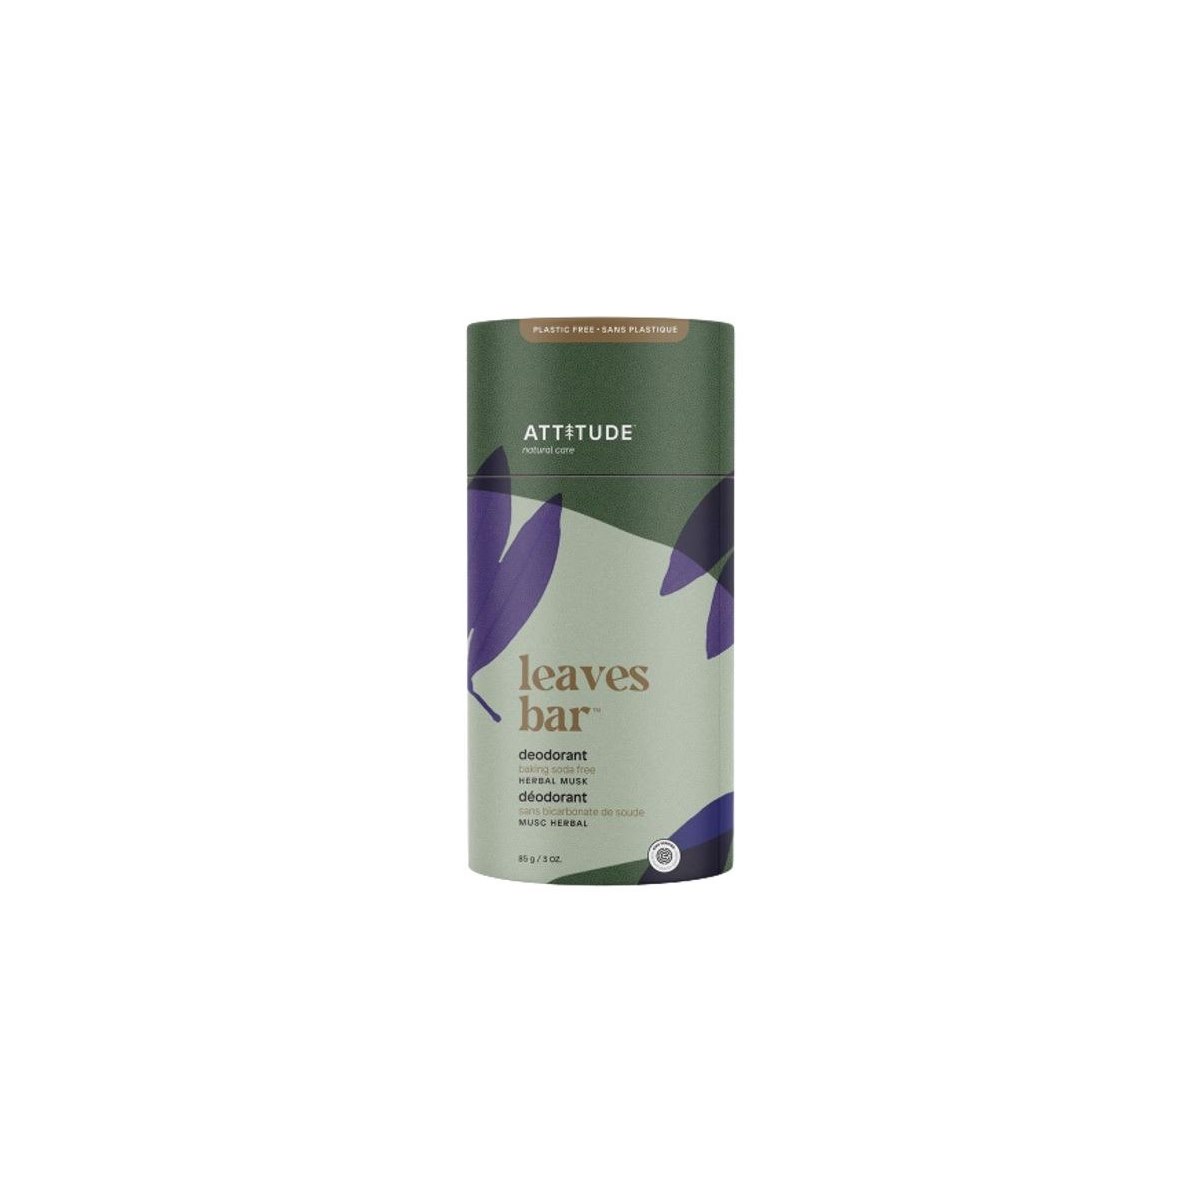 Deodorant Leaves Bar - Herbal Musk 85g